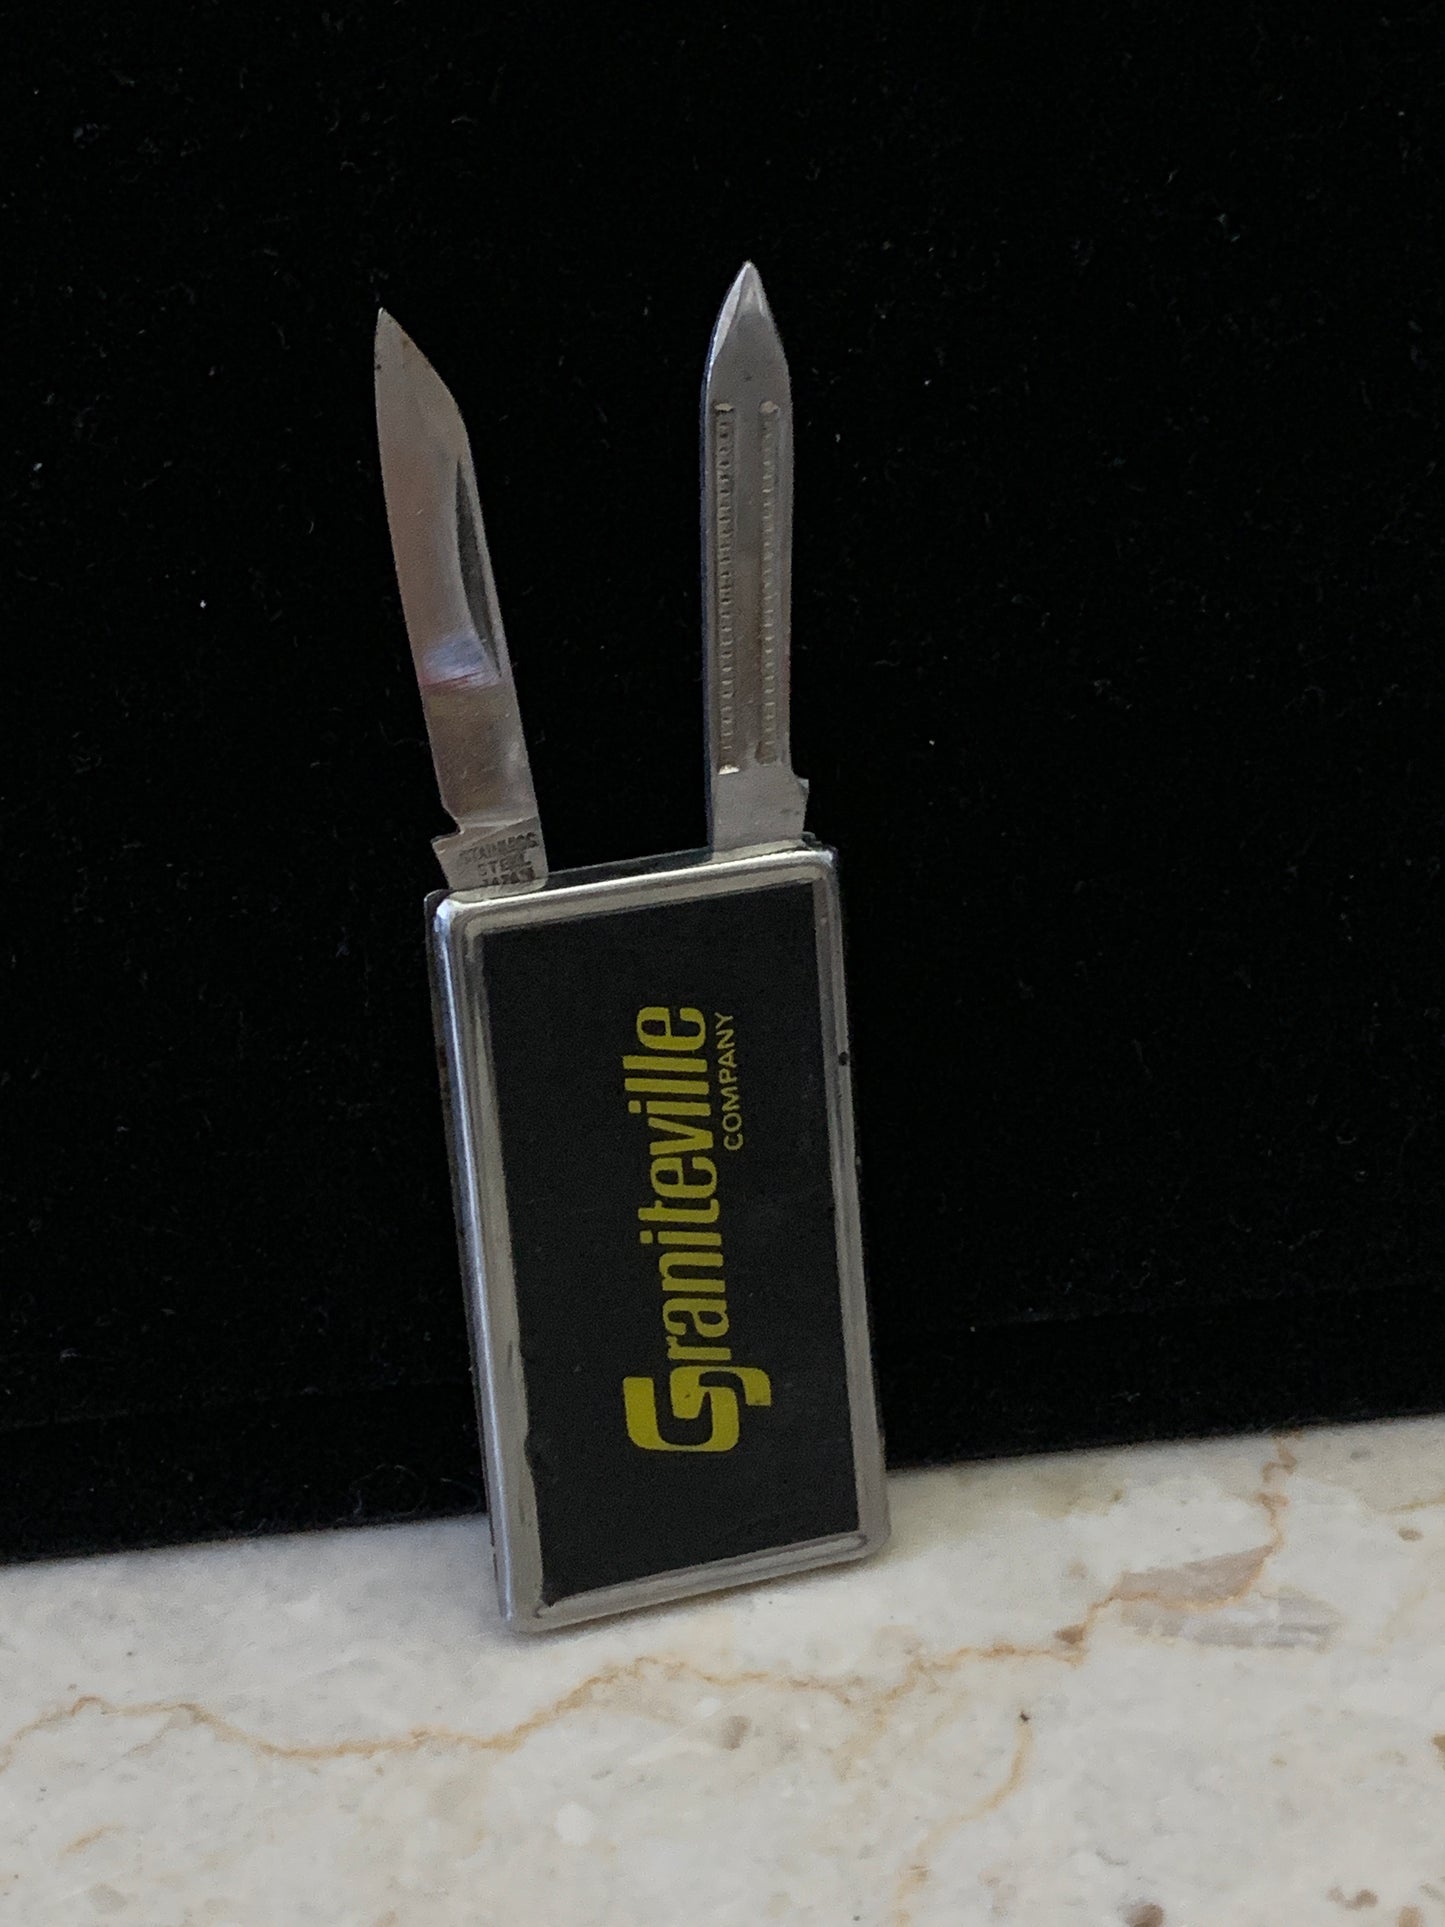 Vintage Pocket Knife Money Clip Company Advertising Graniteville Company